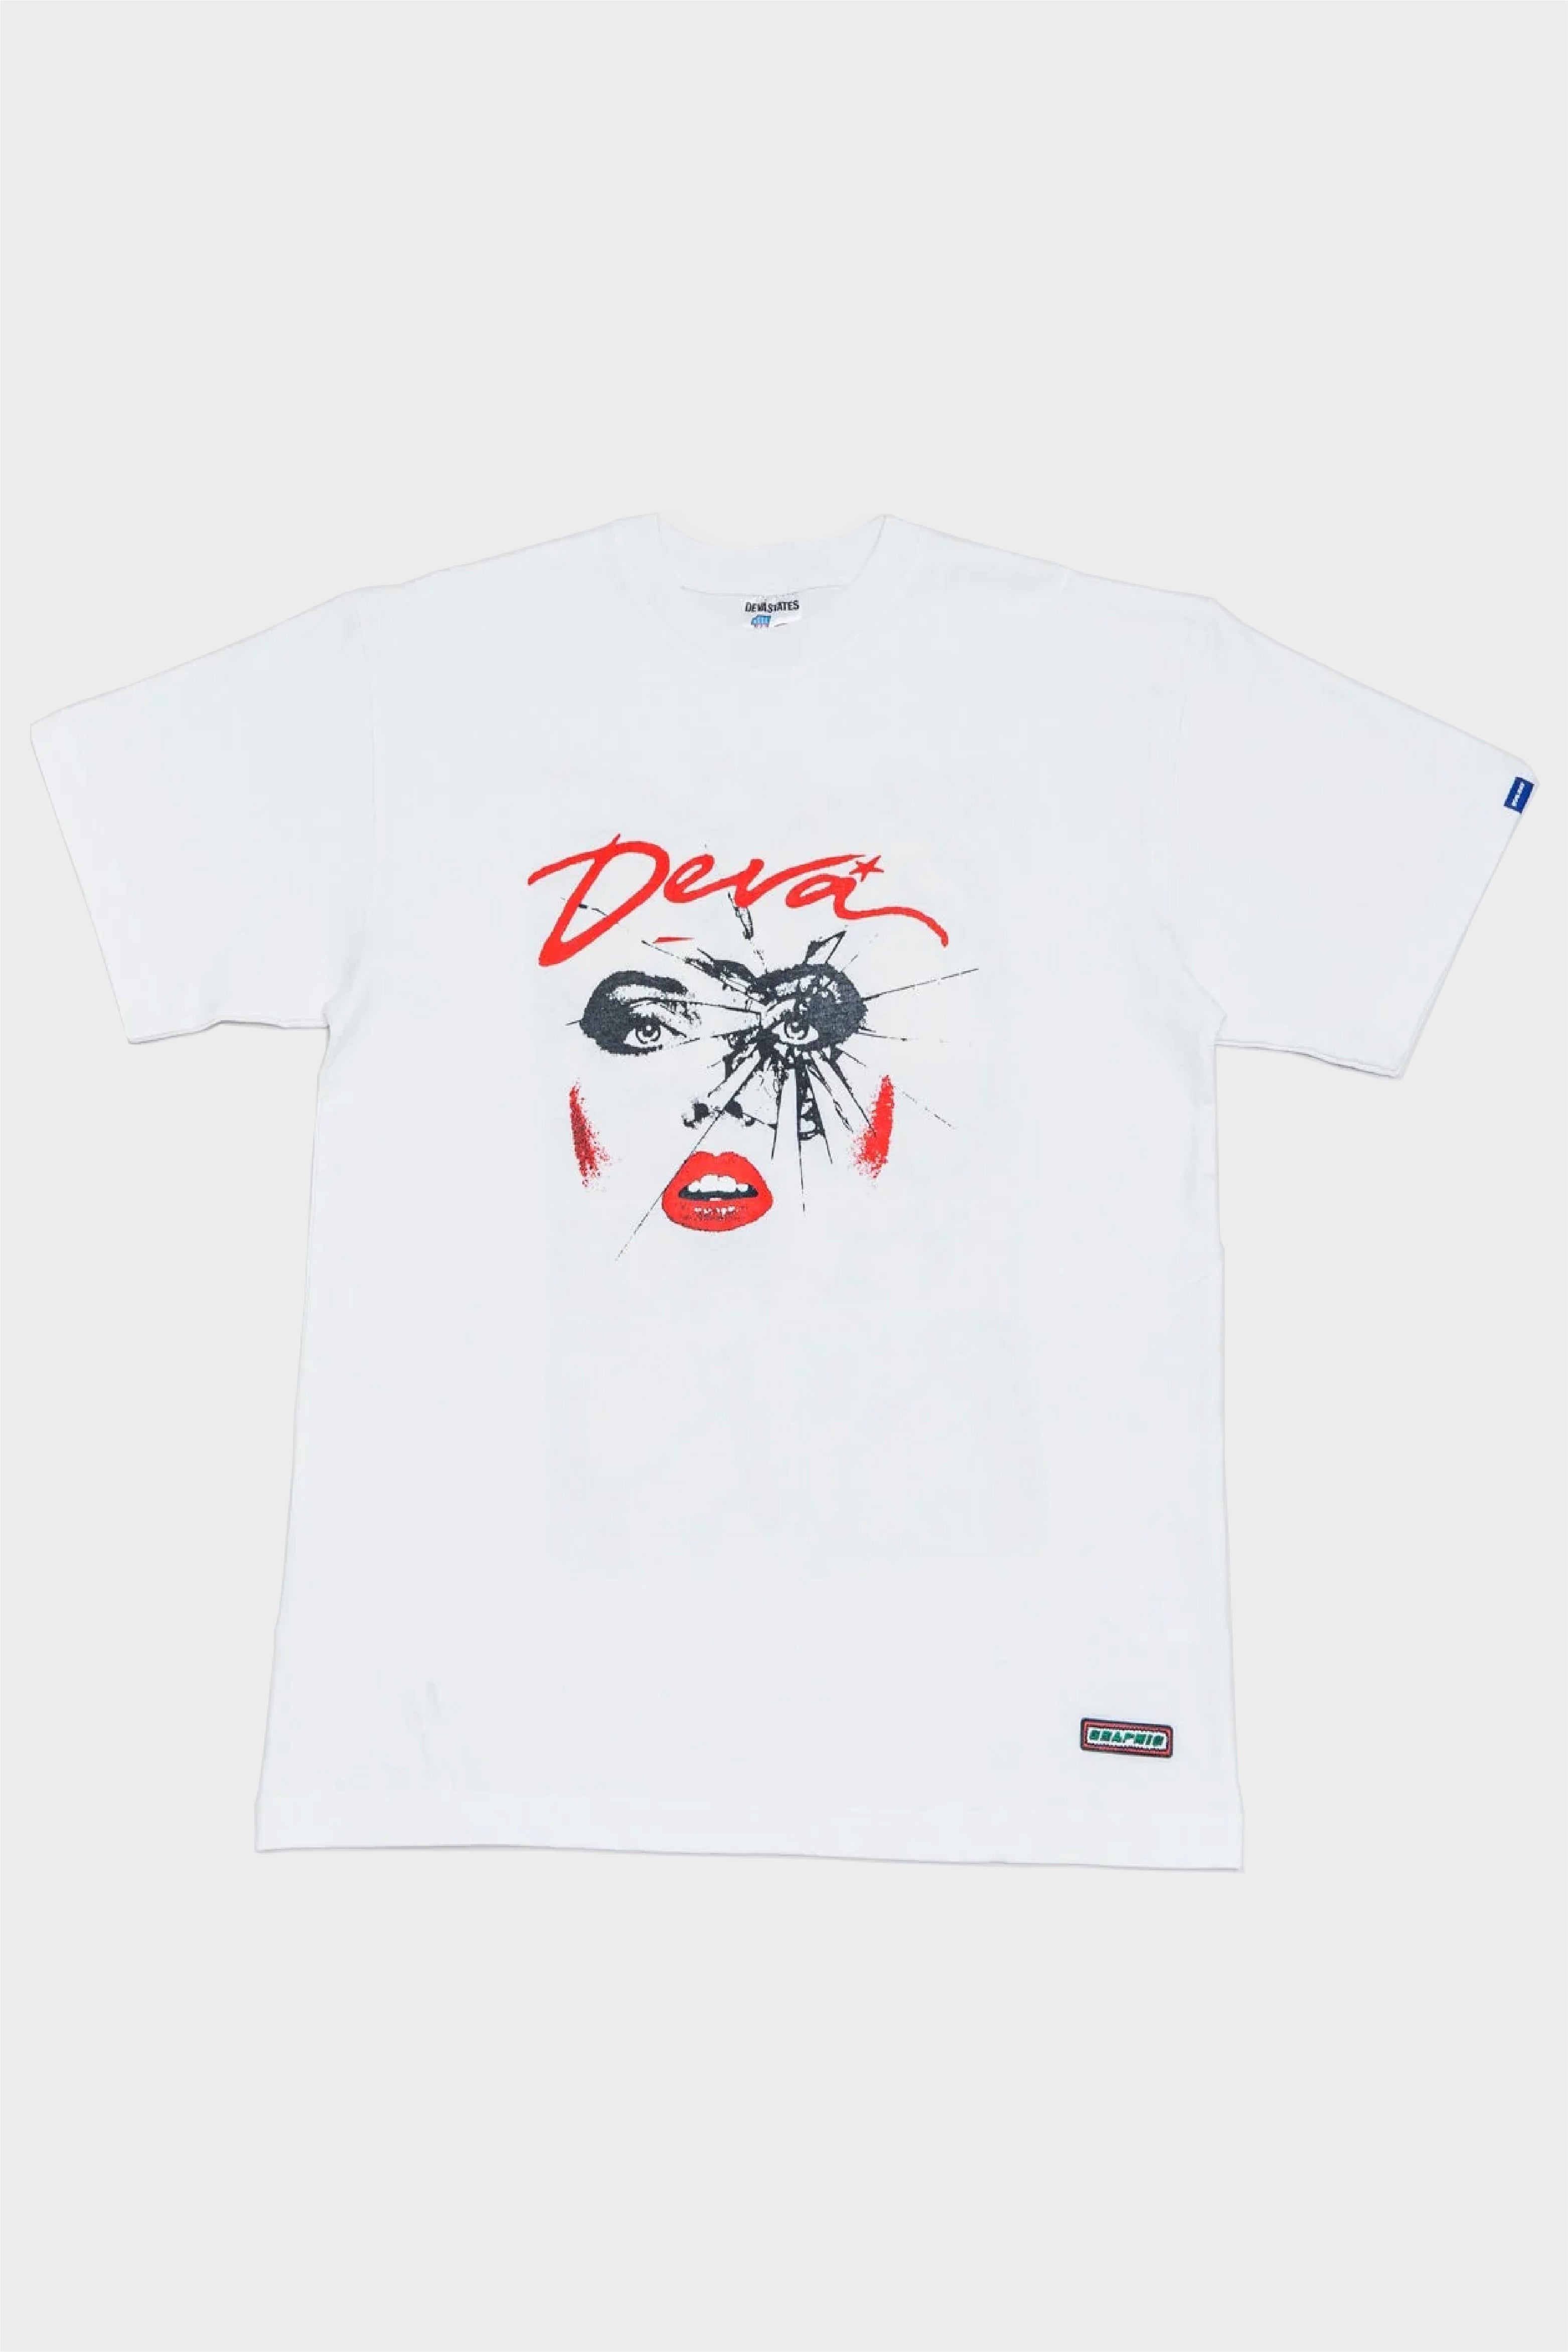 Selectshop FRAME - DEVA STATES Dreaming Tee T-Shirts Concept Store Dubai